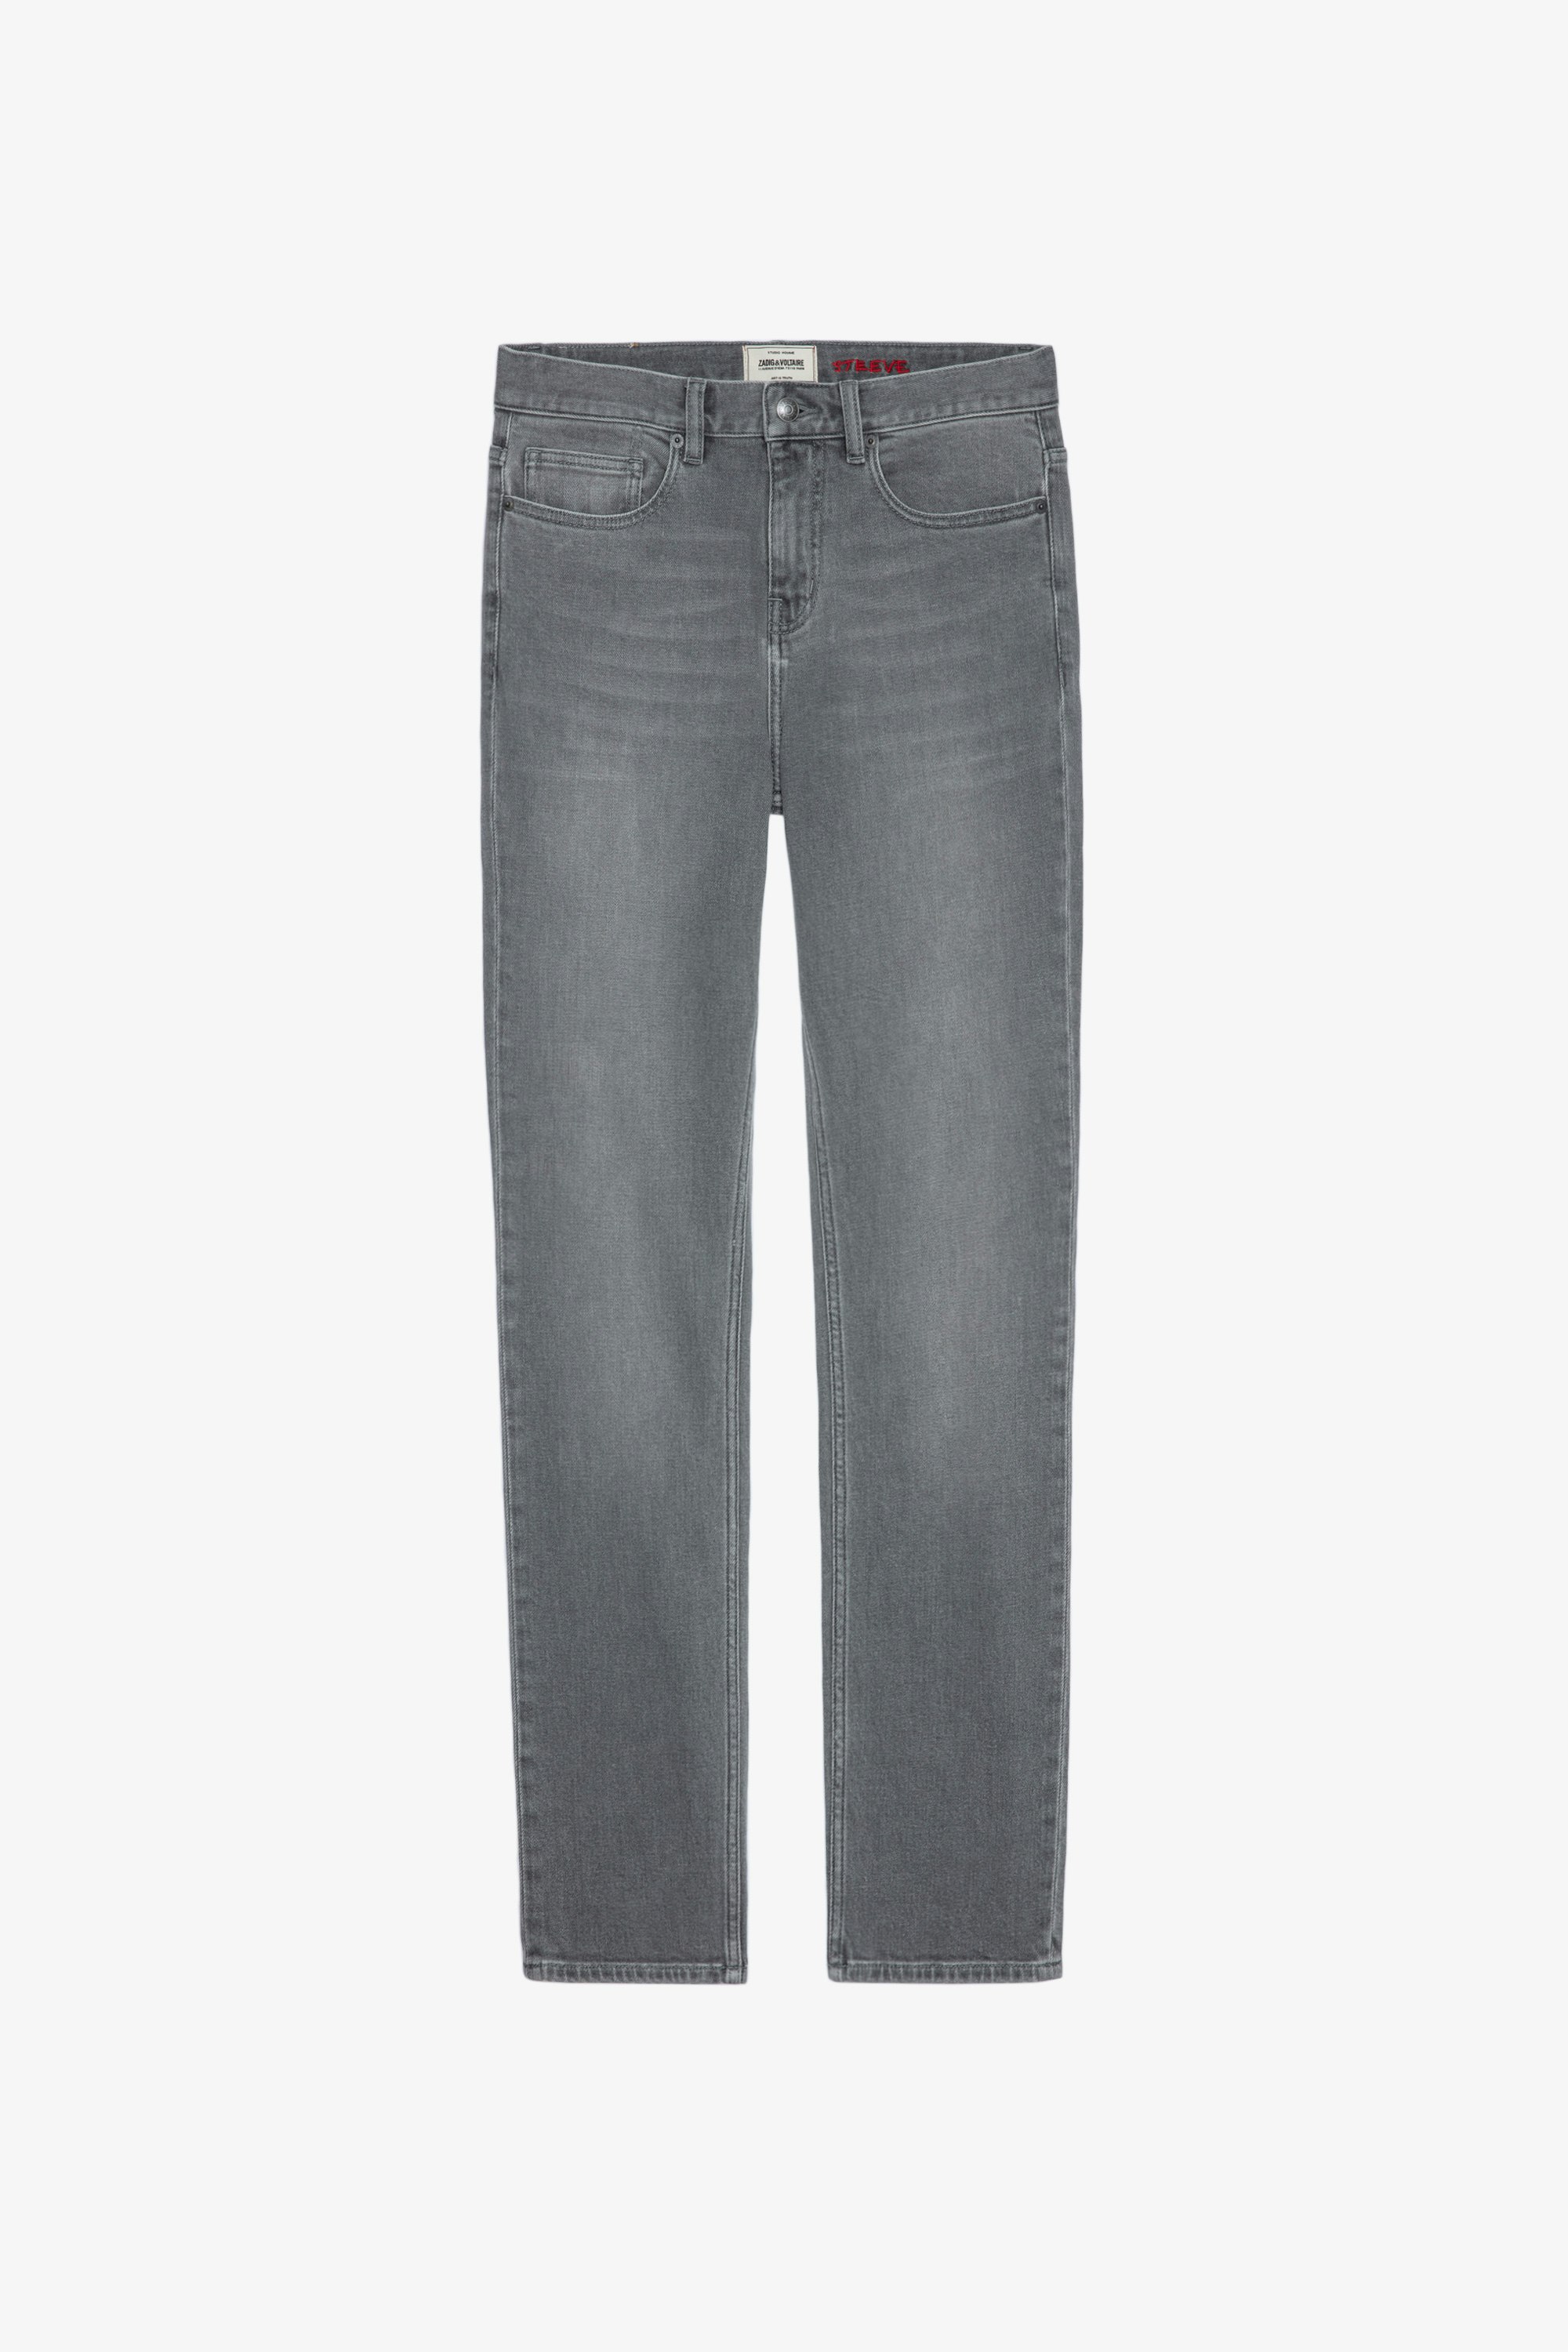 Steeve Jeans  - Men’s regular-fit grey denim jeans